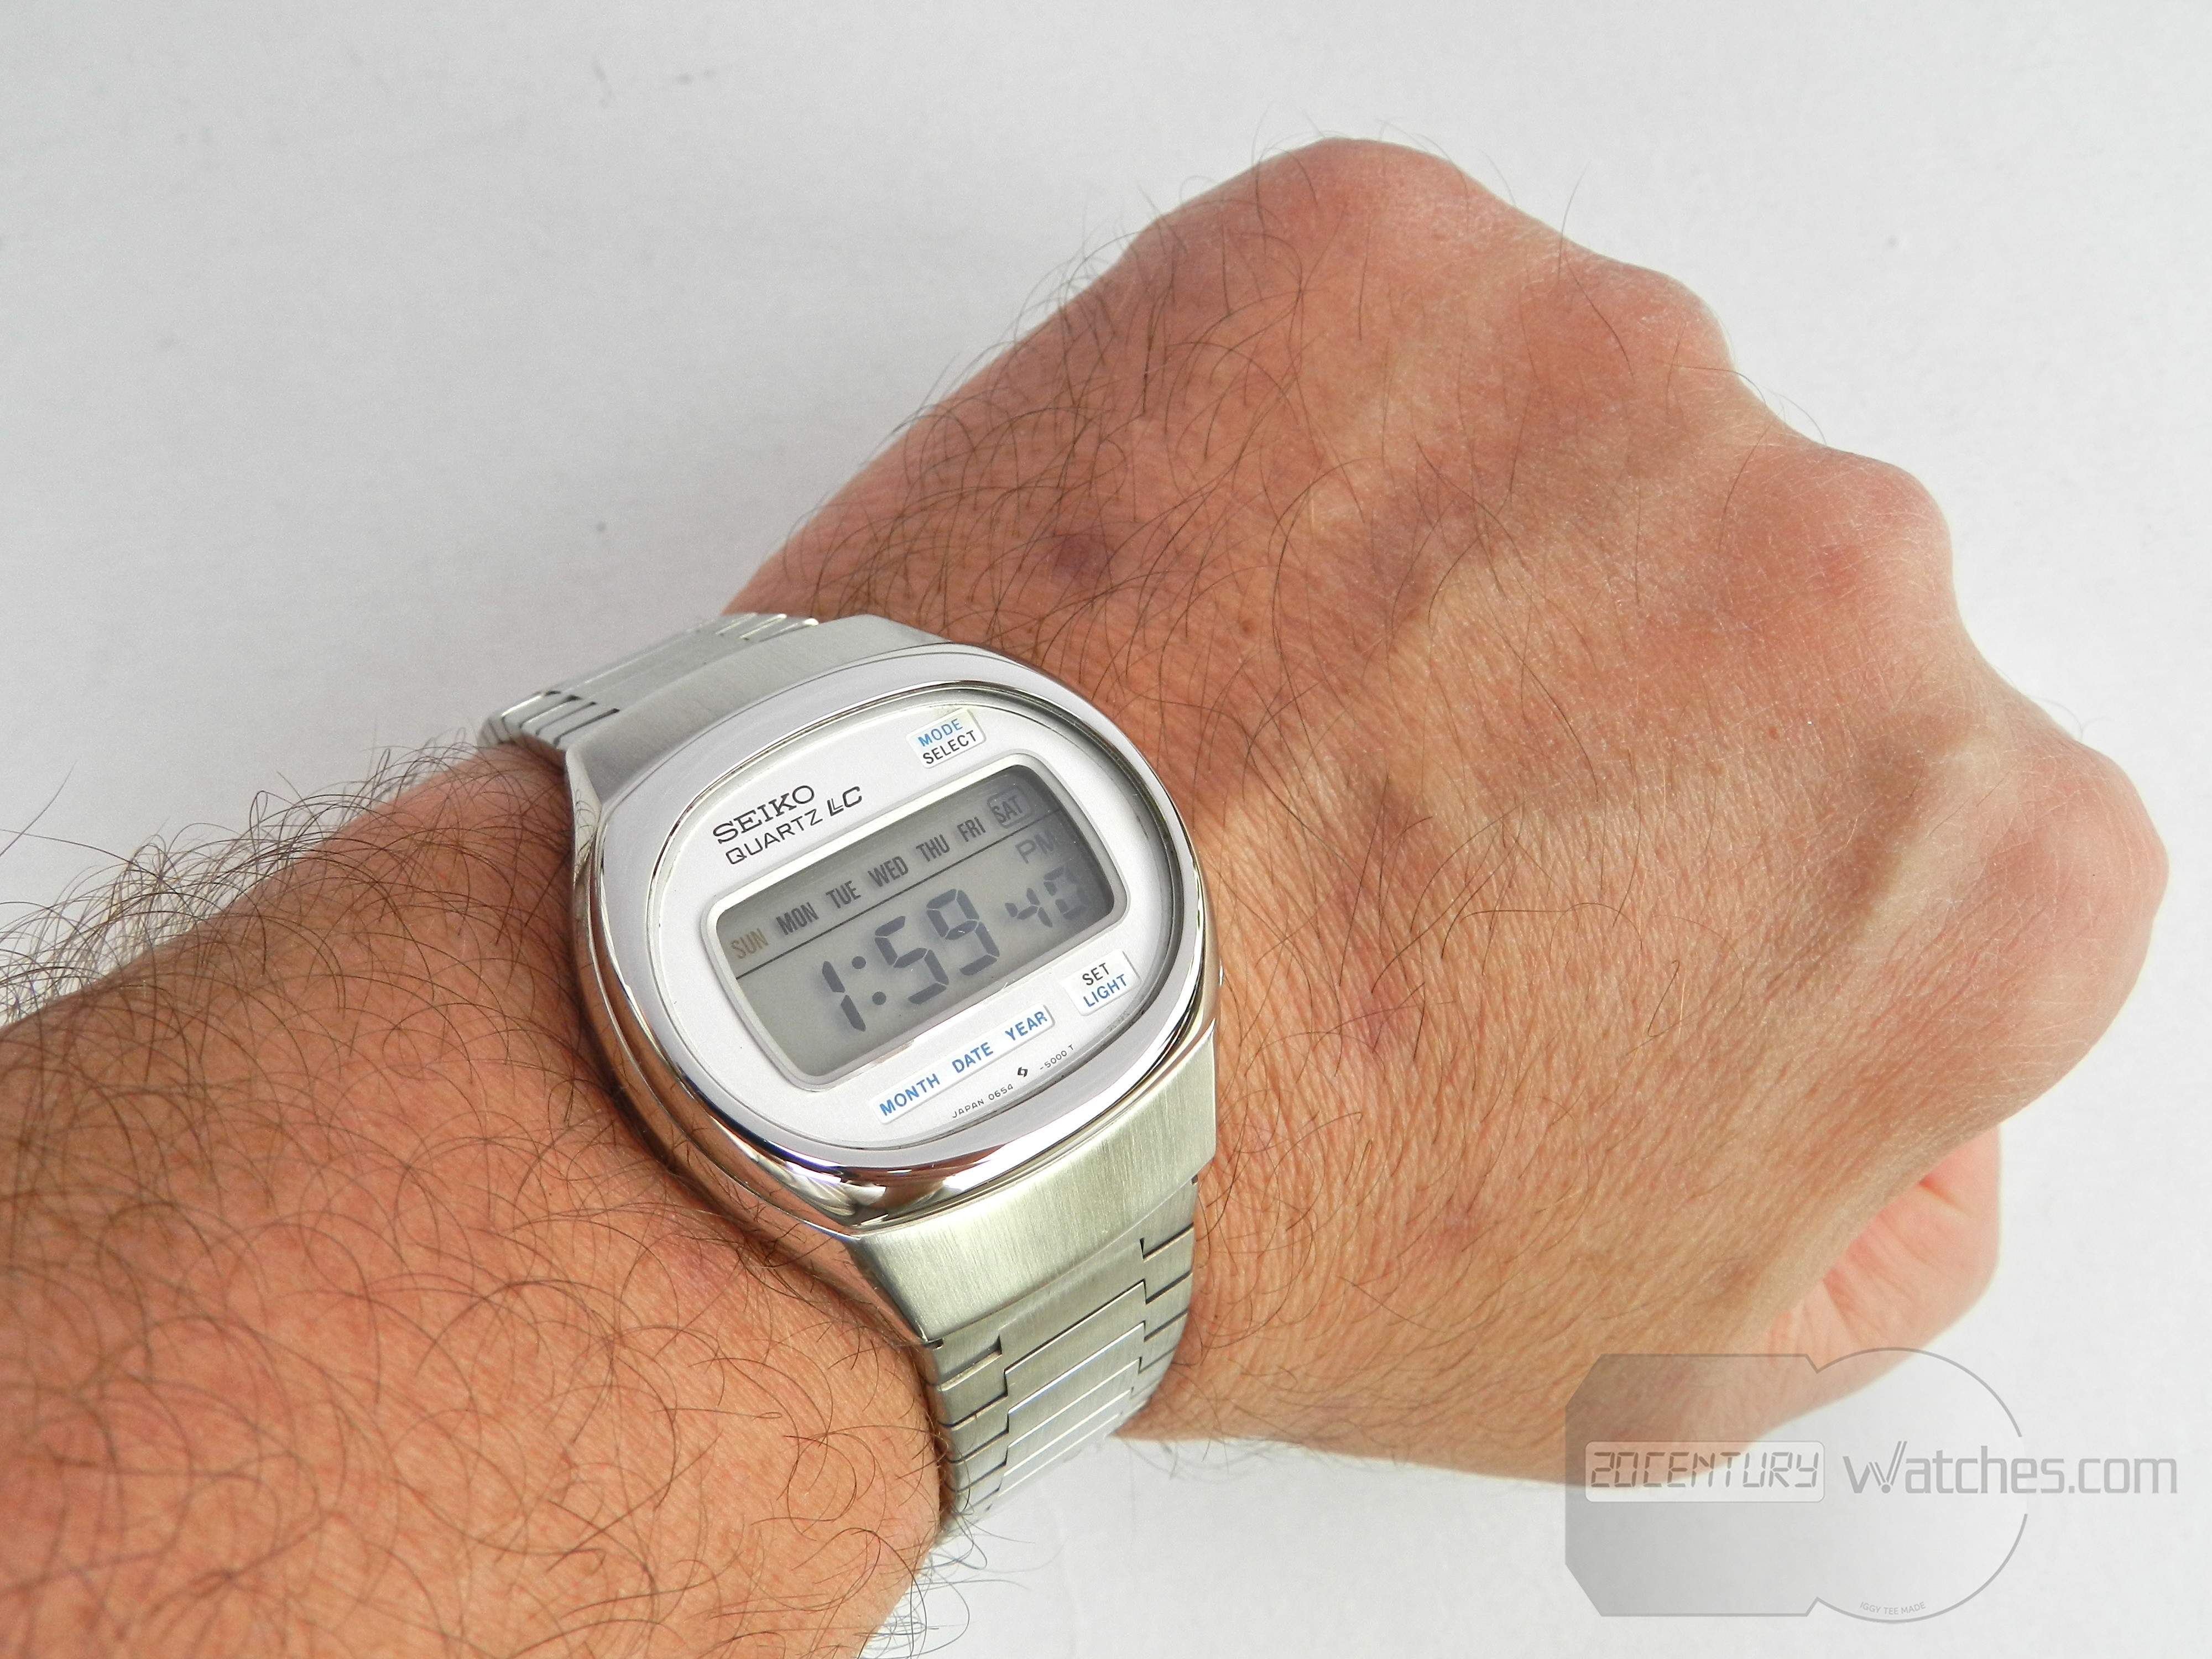 Seiko LC Quartz – 20th Century Watches